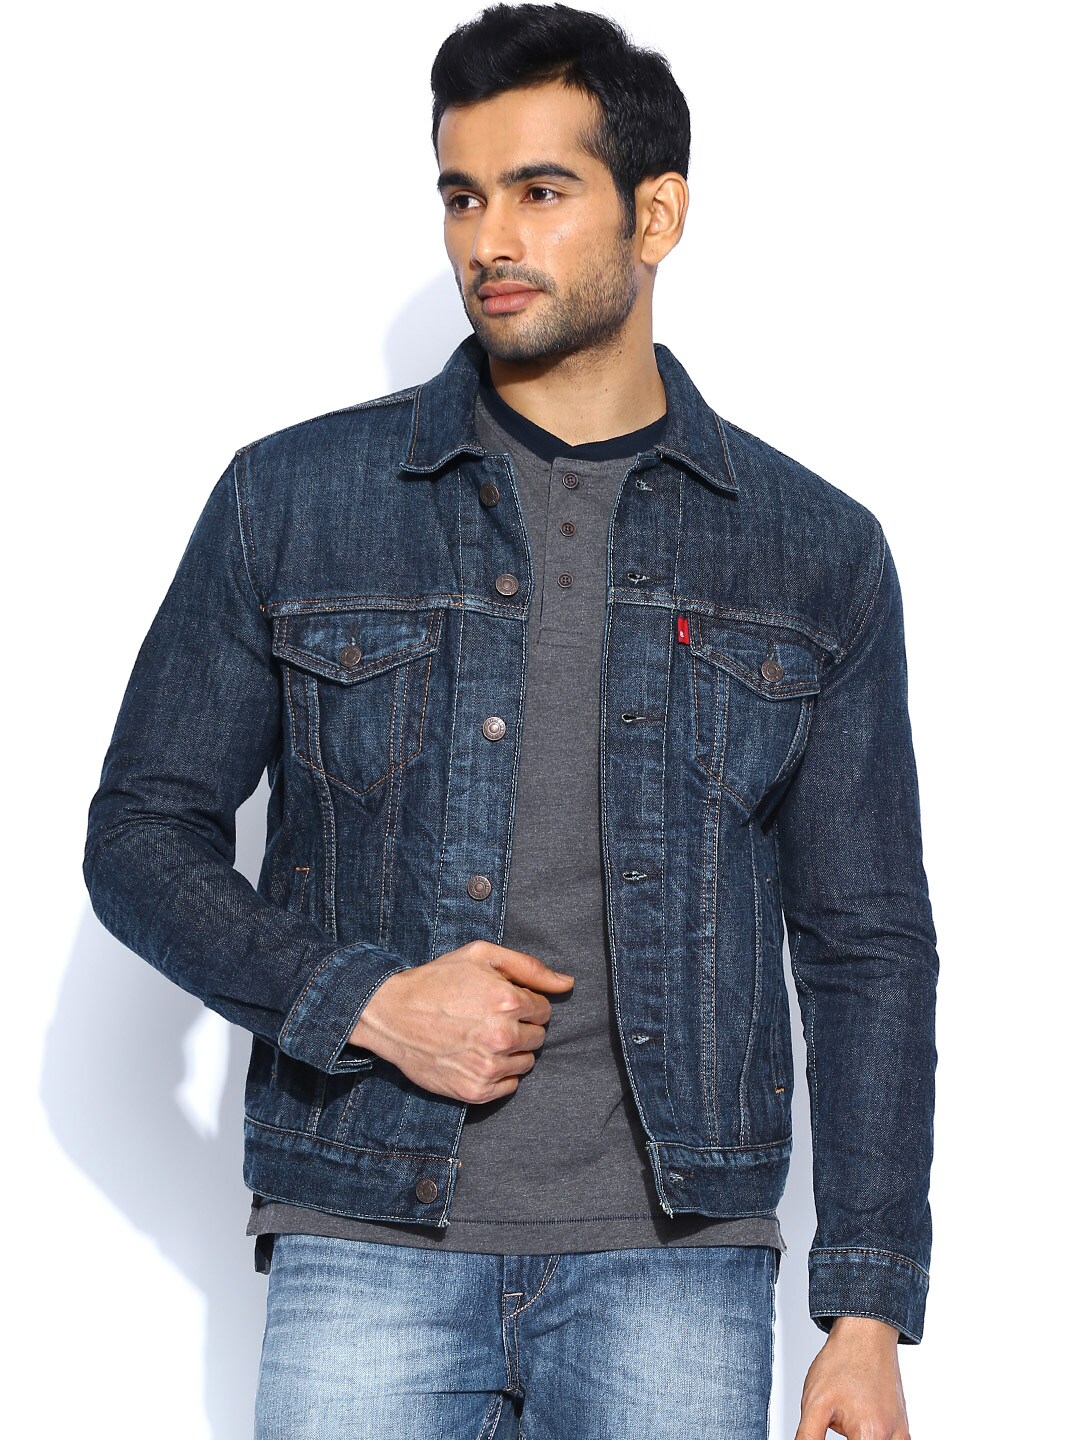 levis jackets online india